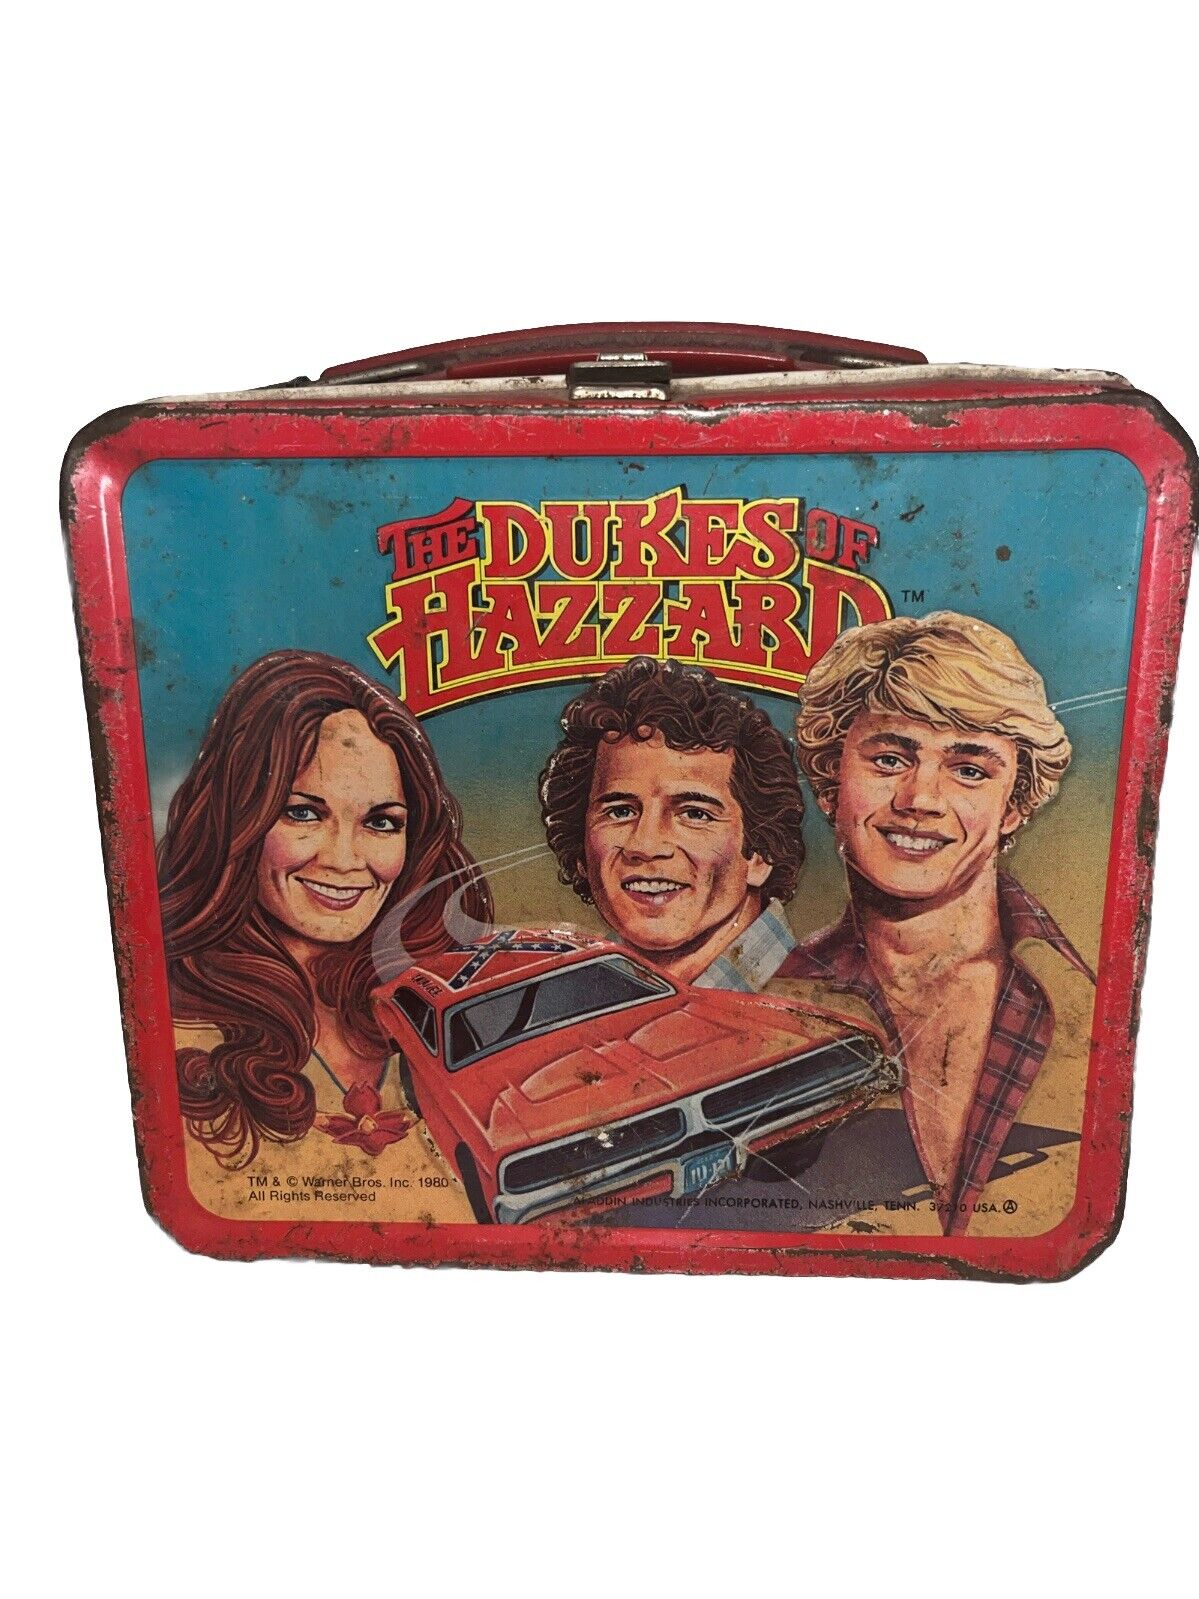 Vintage 1980 Dukes Of Hazzard Metal Lunch Box Aladdin Industries